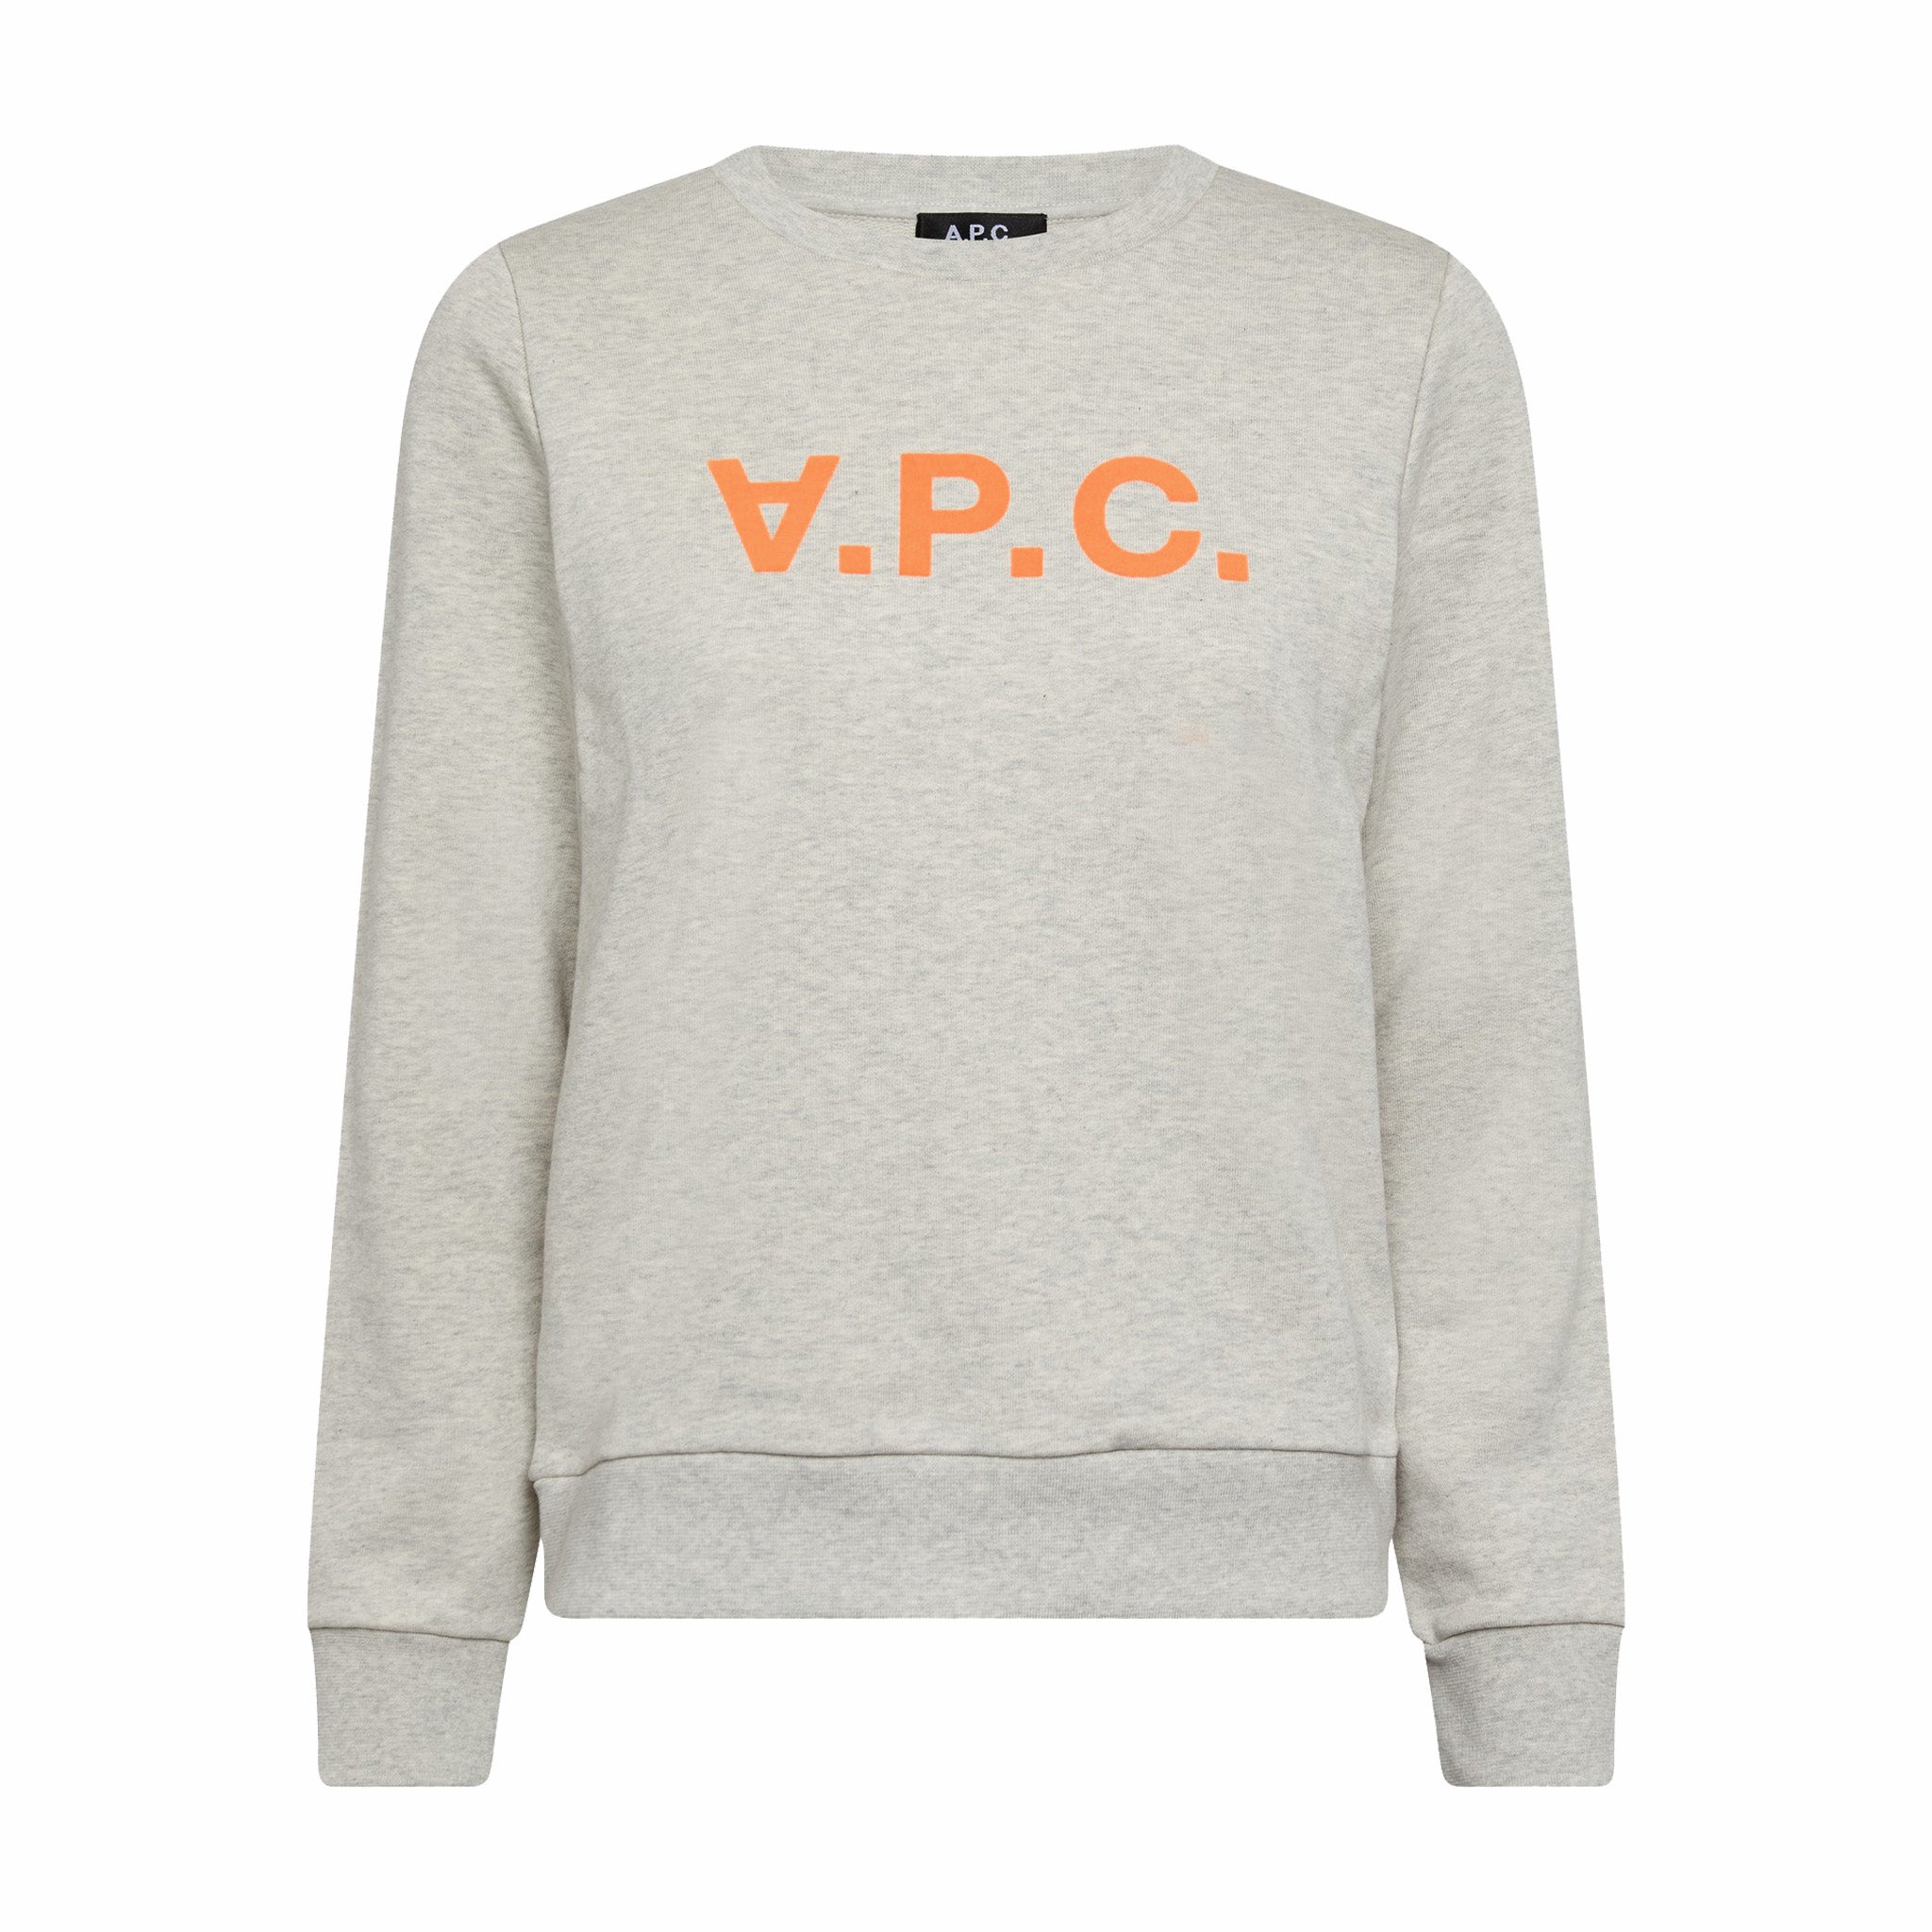 A.P.C. VPC Bicolore Sweatshirt (Ecru Chine/Orange) - August Shop